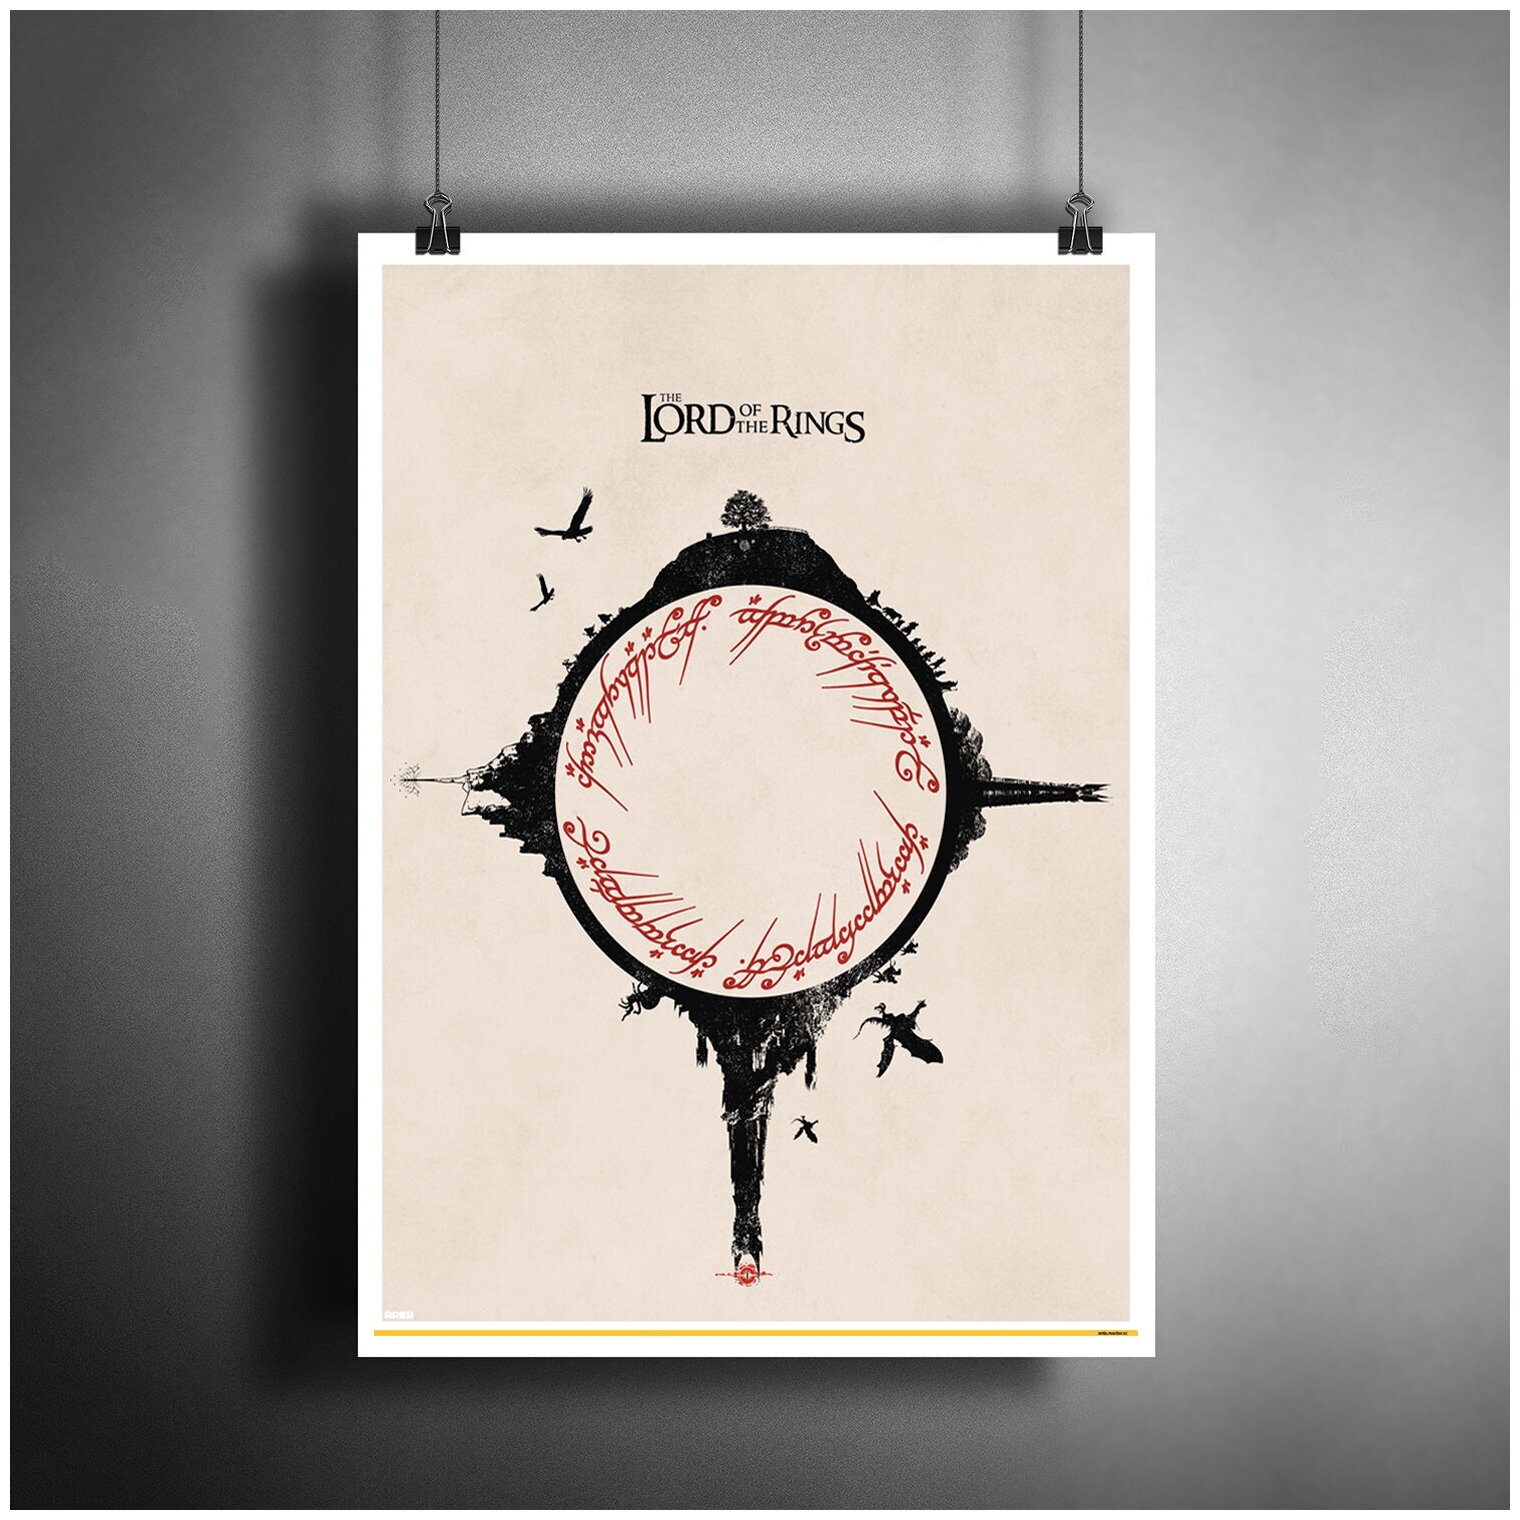 Постер плакат для интерьера "Фильм: Властелин Колец. The Lord of the Rings, Tolkien"/ Декор дома, офиса, комнаты A3 (297 x 420 мм)